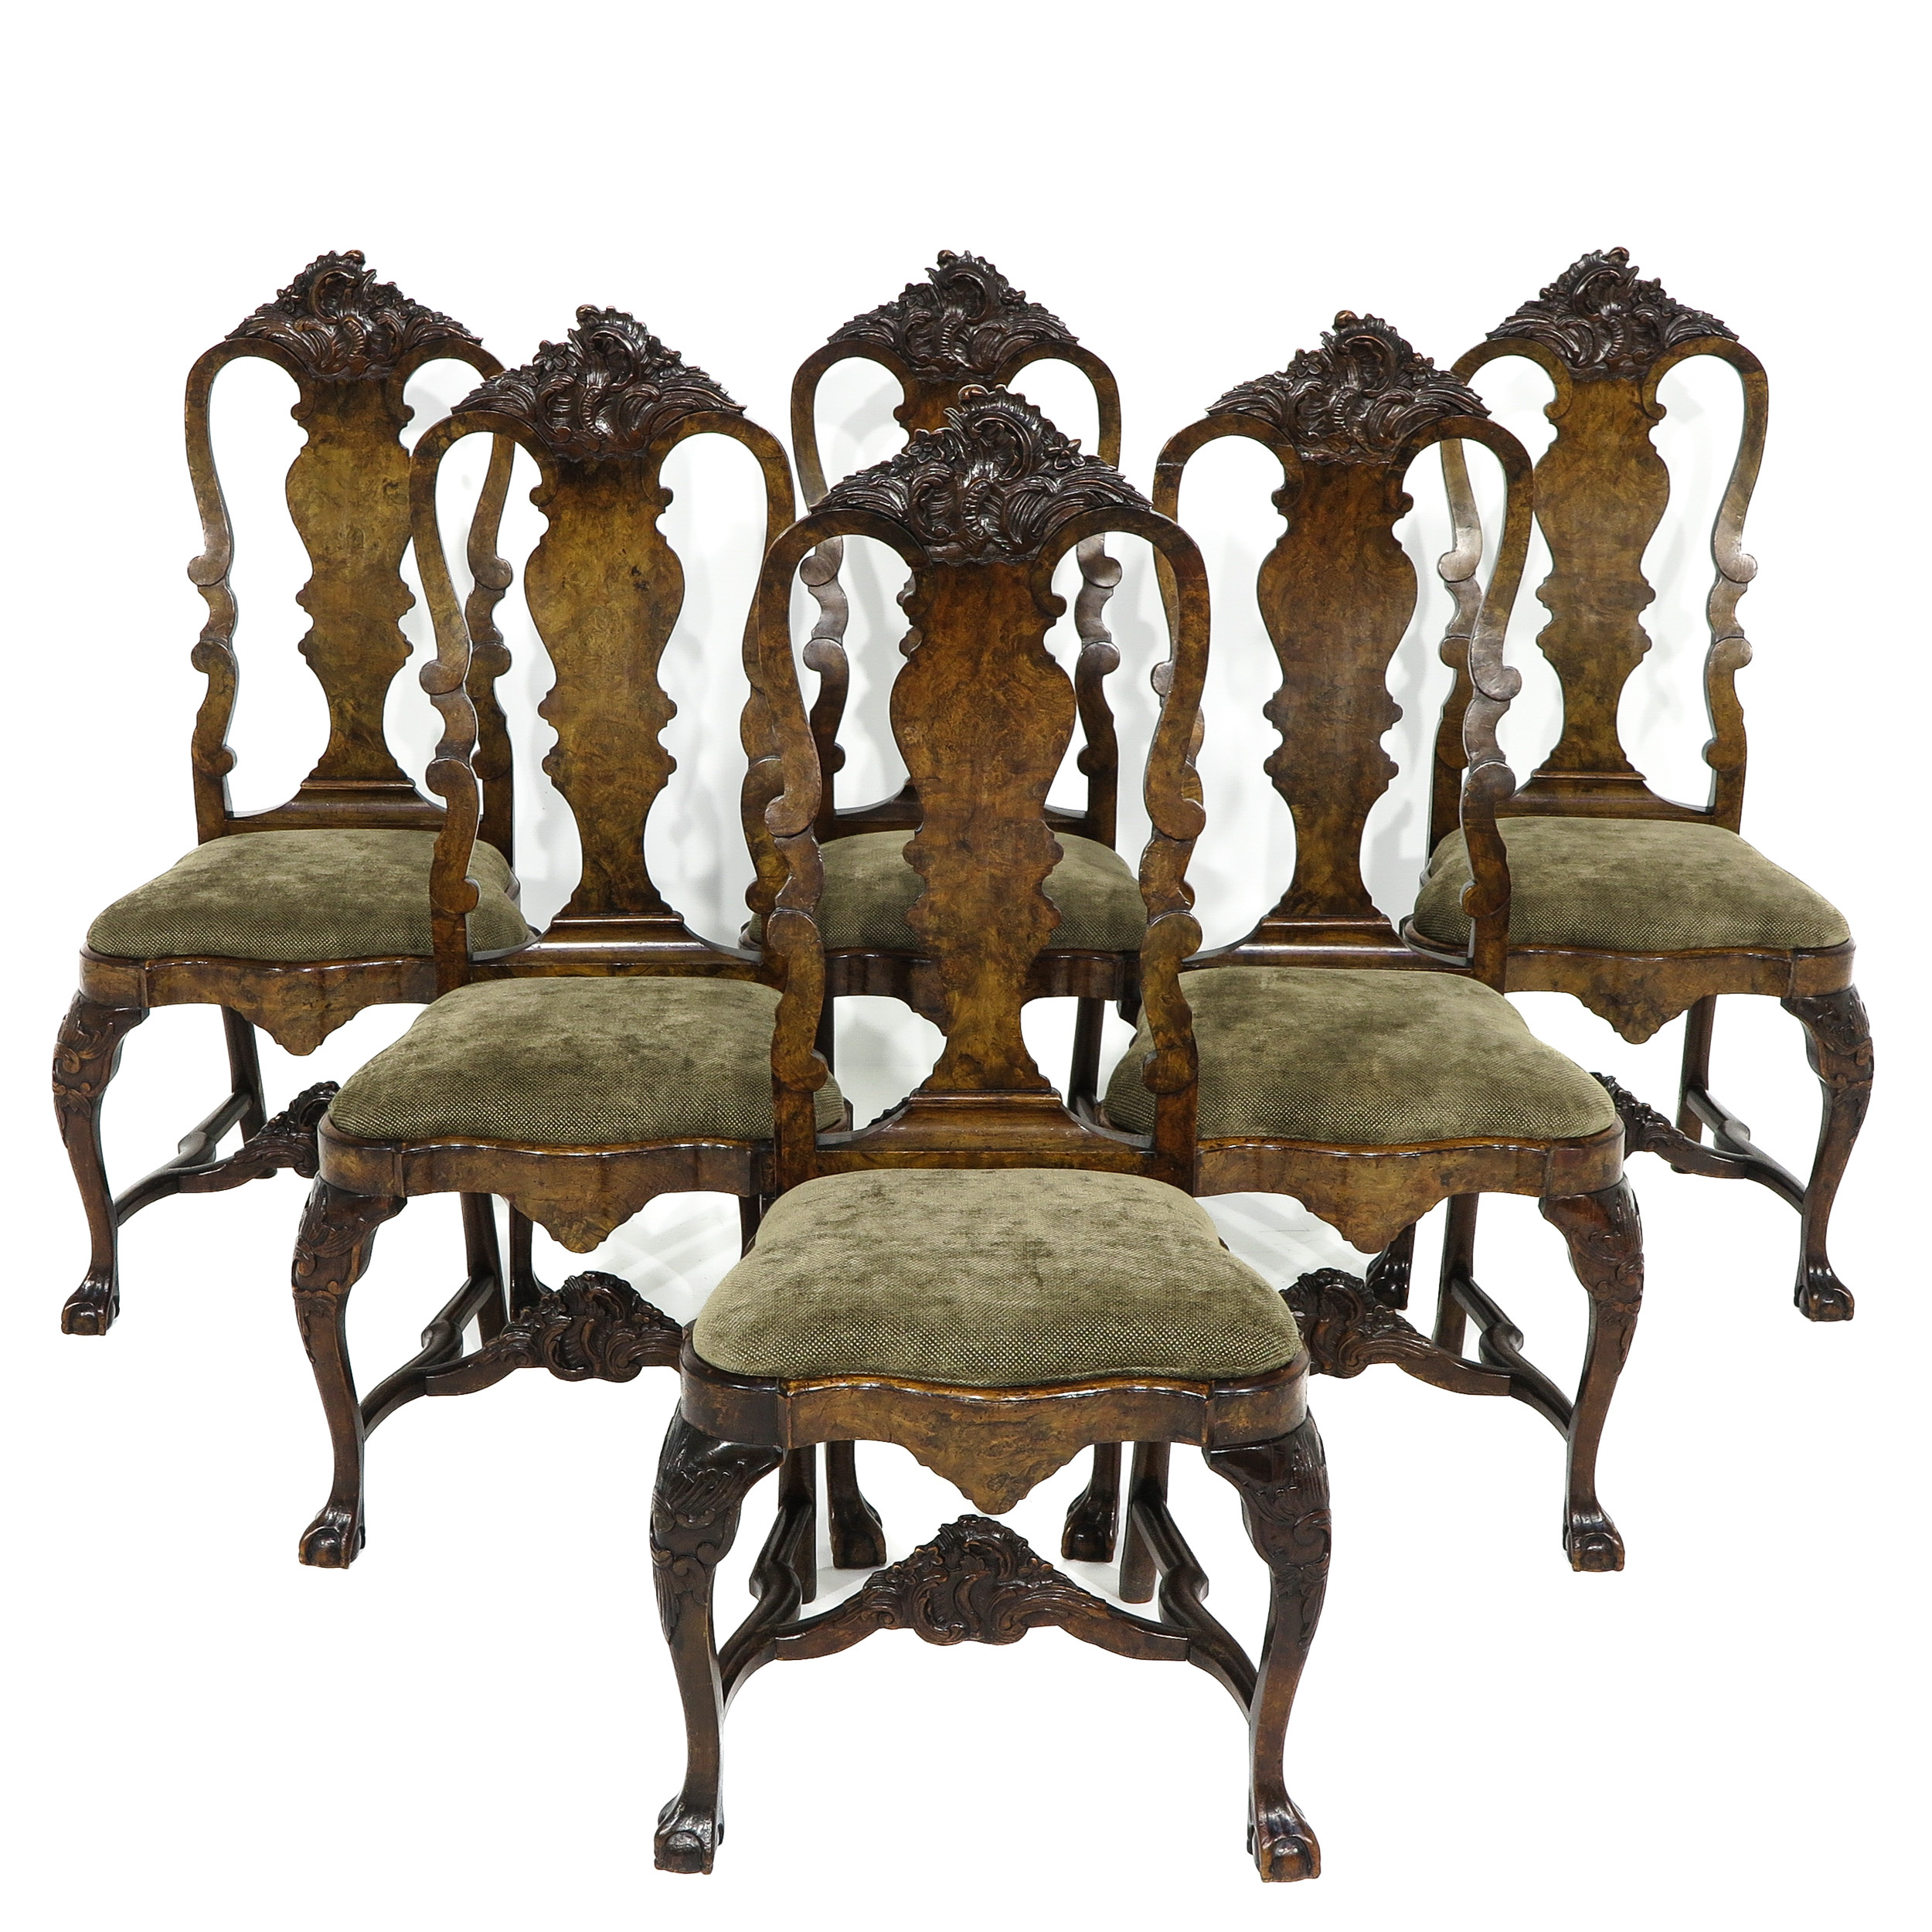 A Set of 6 Walnut Chairs